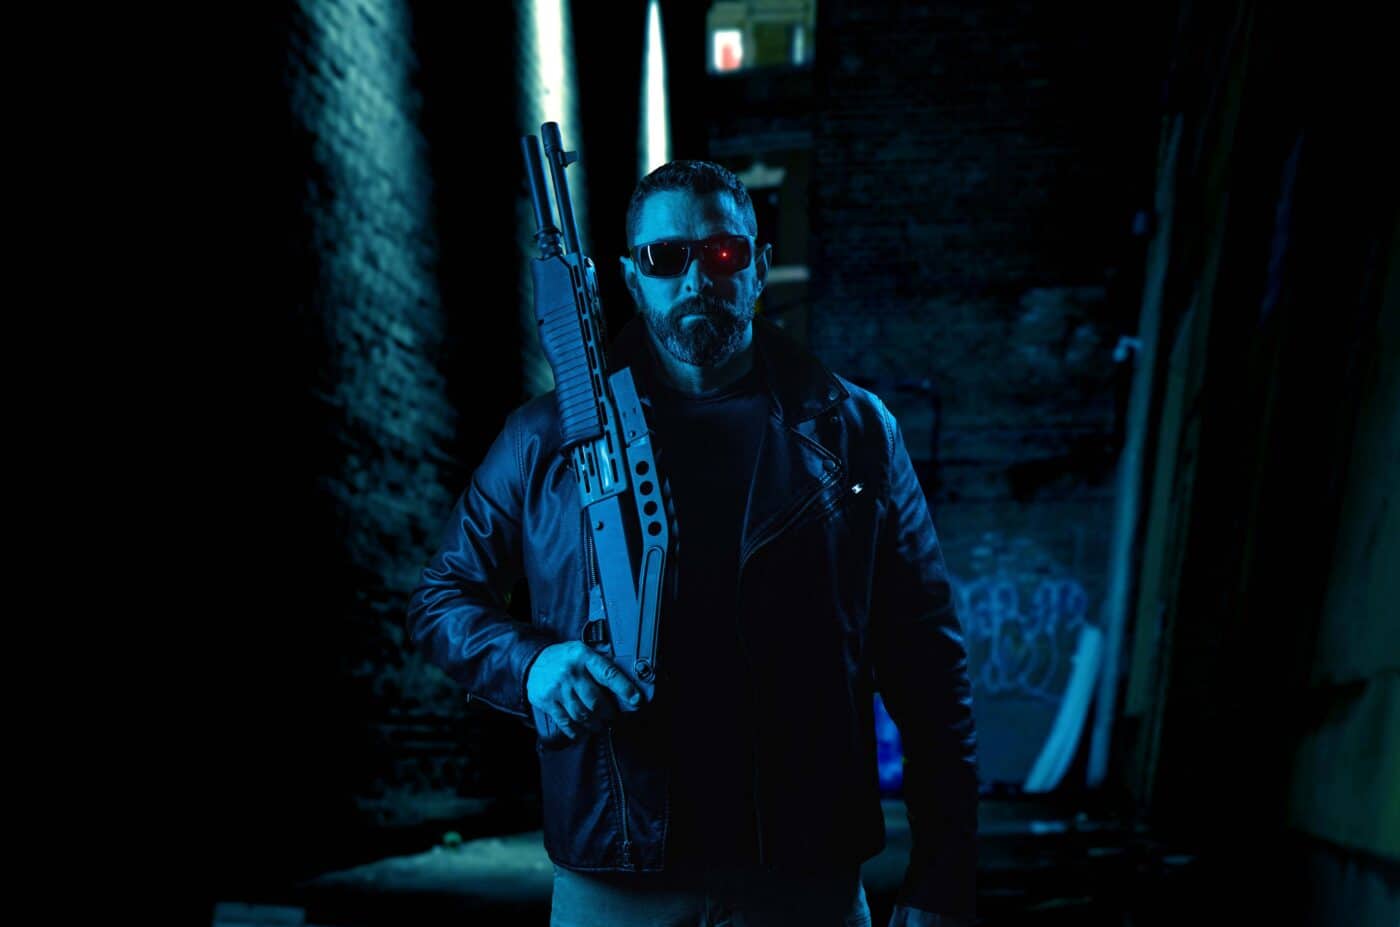 Man dressed as The Terminator with SPAS-12 shotgun